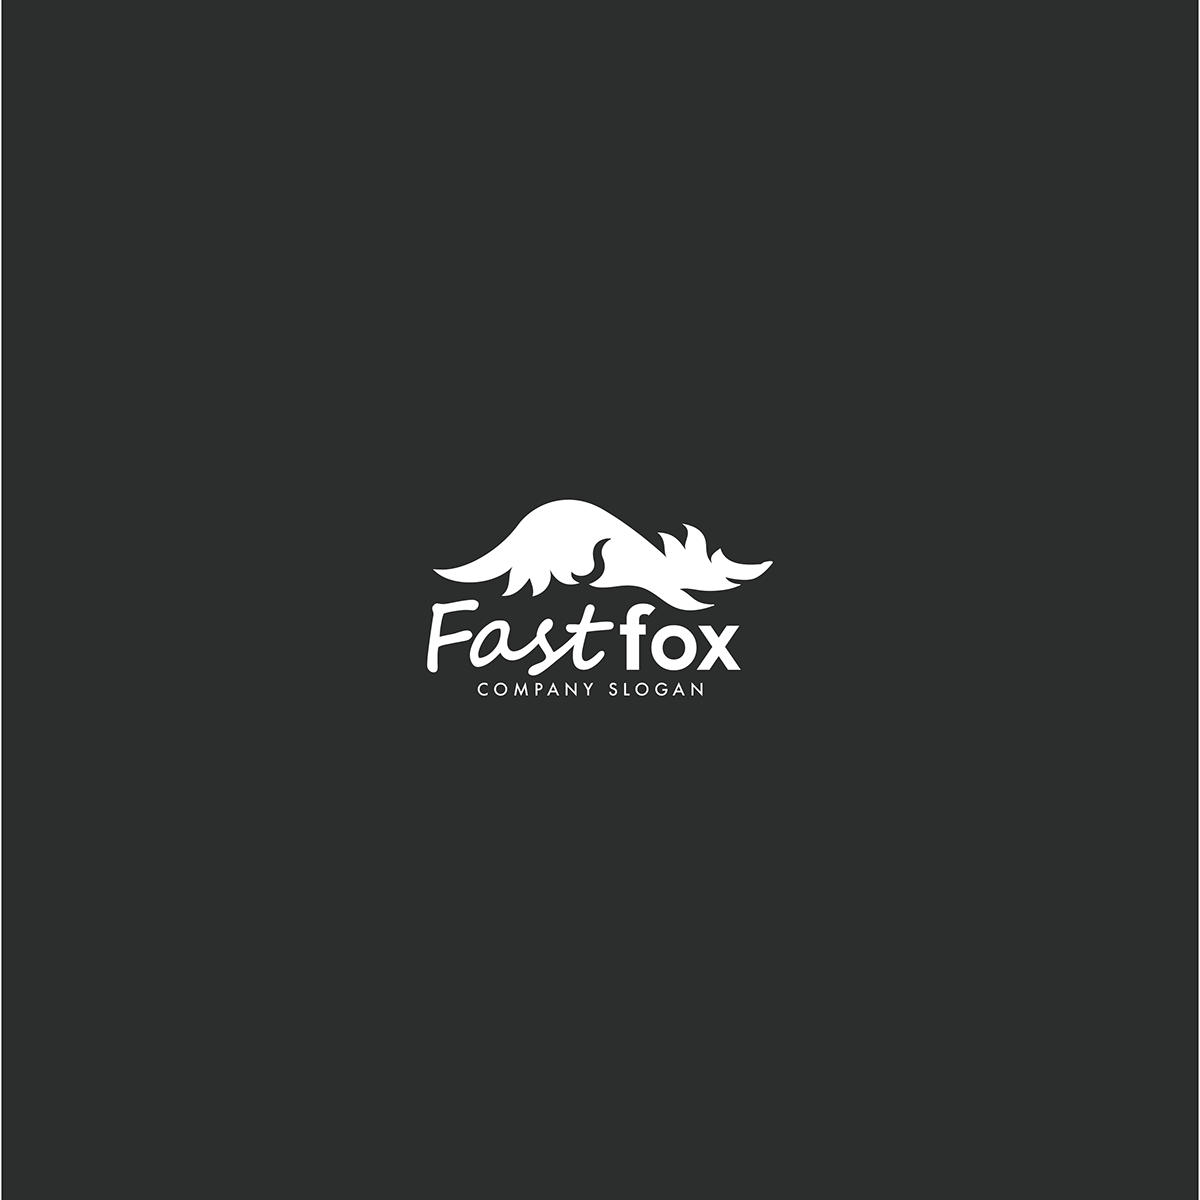 brand colors emblem fast fastfox fire fire gradient FOX gradient hallmark Label logo design luxury